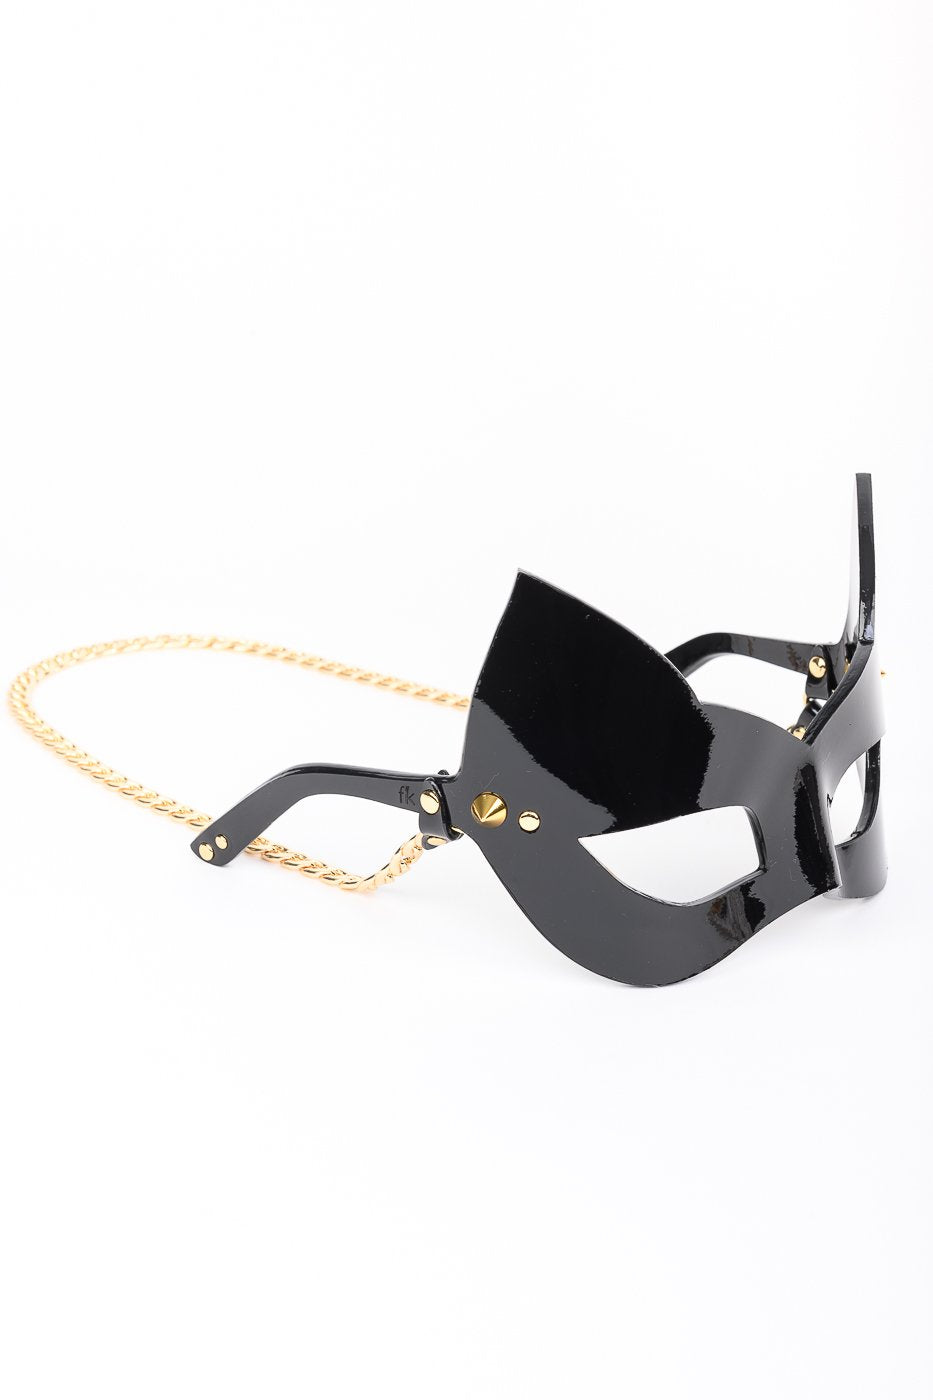 Fraulein Kink Rica Kitten Sunglasses with Chain